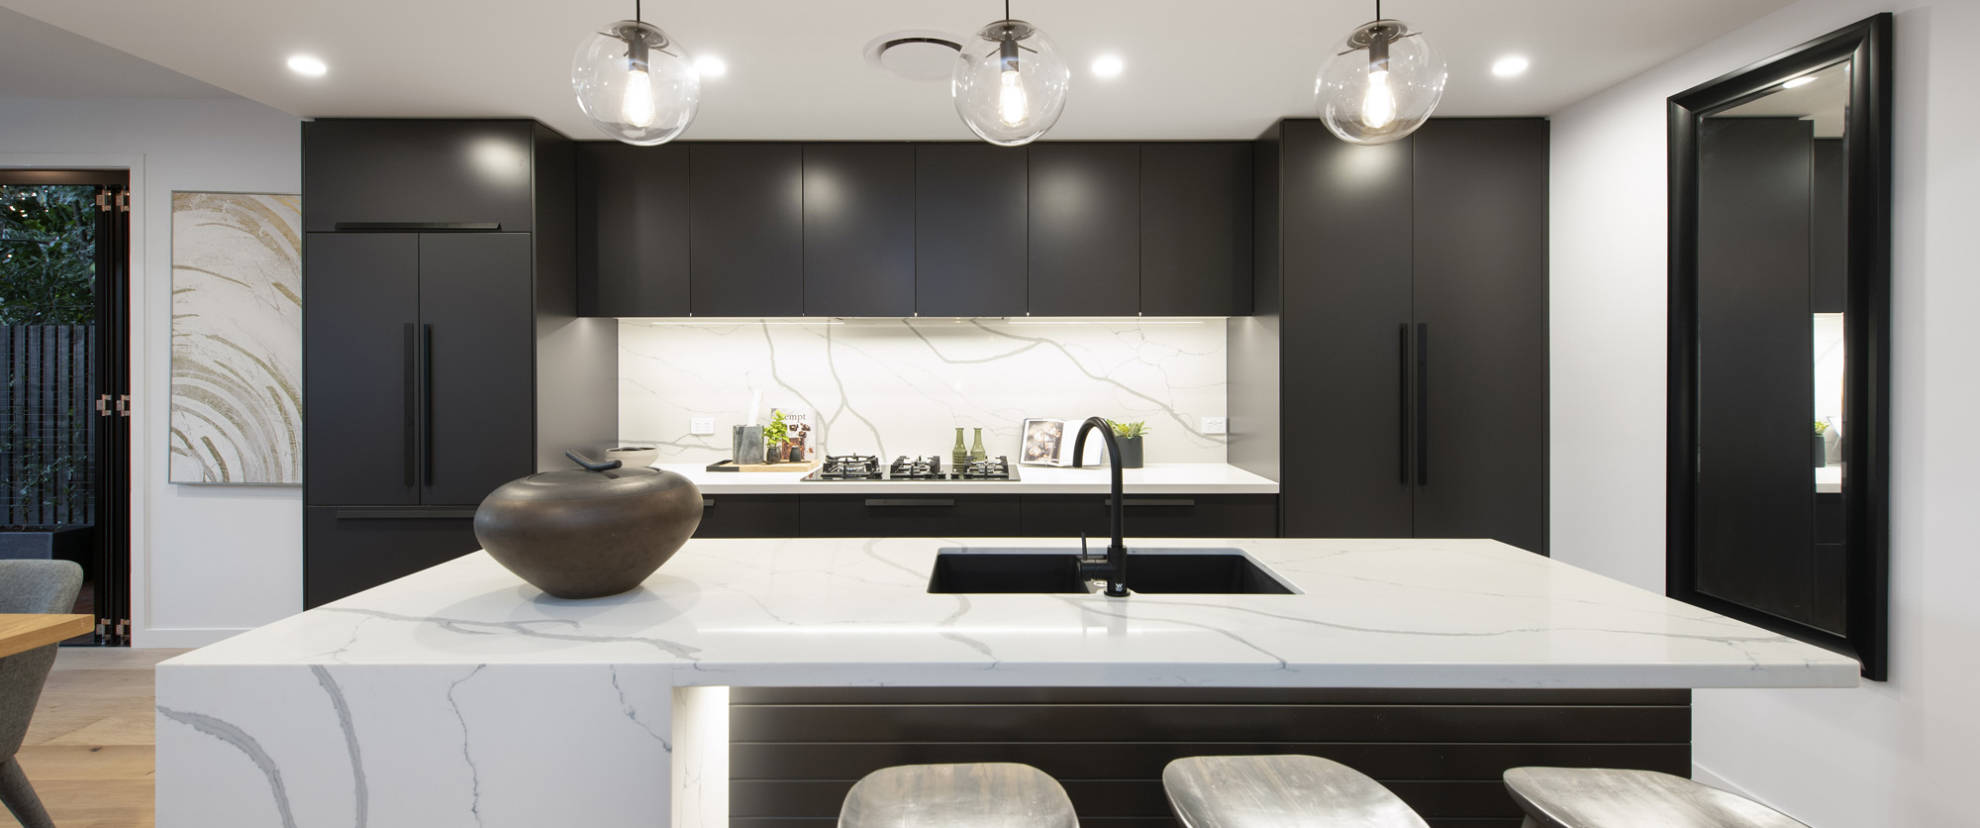 Premium new kitchen with granite benchtops